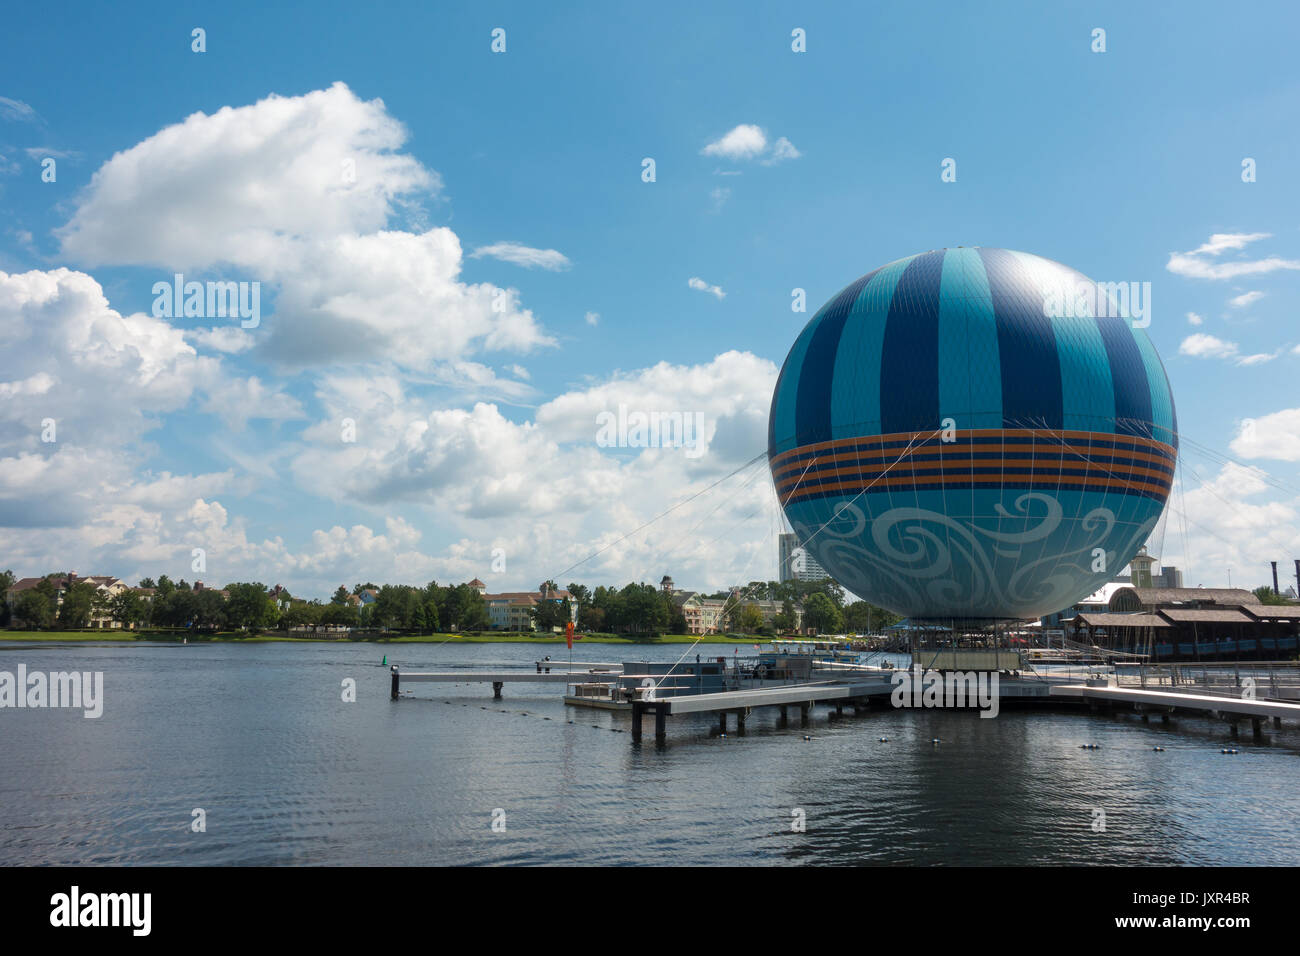 Aerophile / Characters in Flight Helium Ballon in Disney Springs, Walt Disney World, Orlando, Florida. Stock Photo